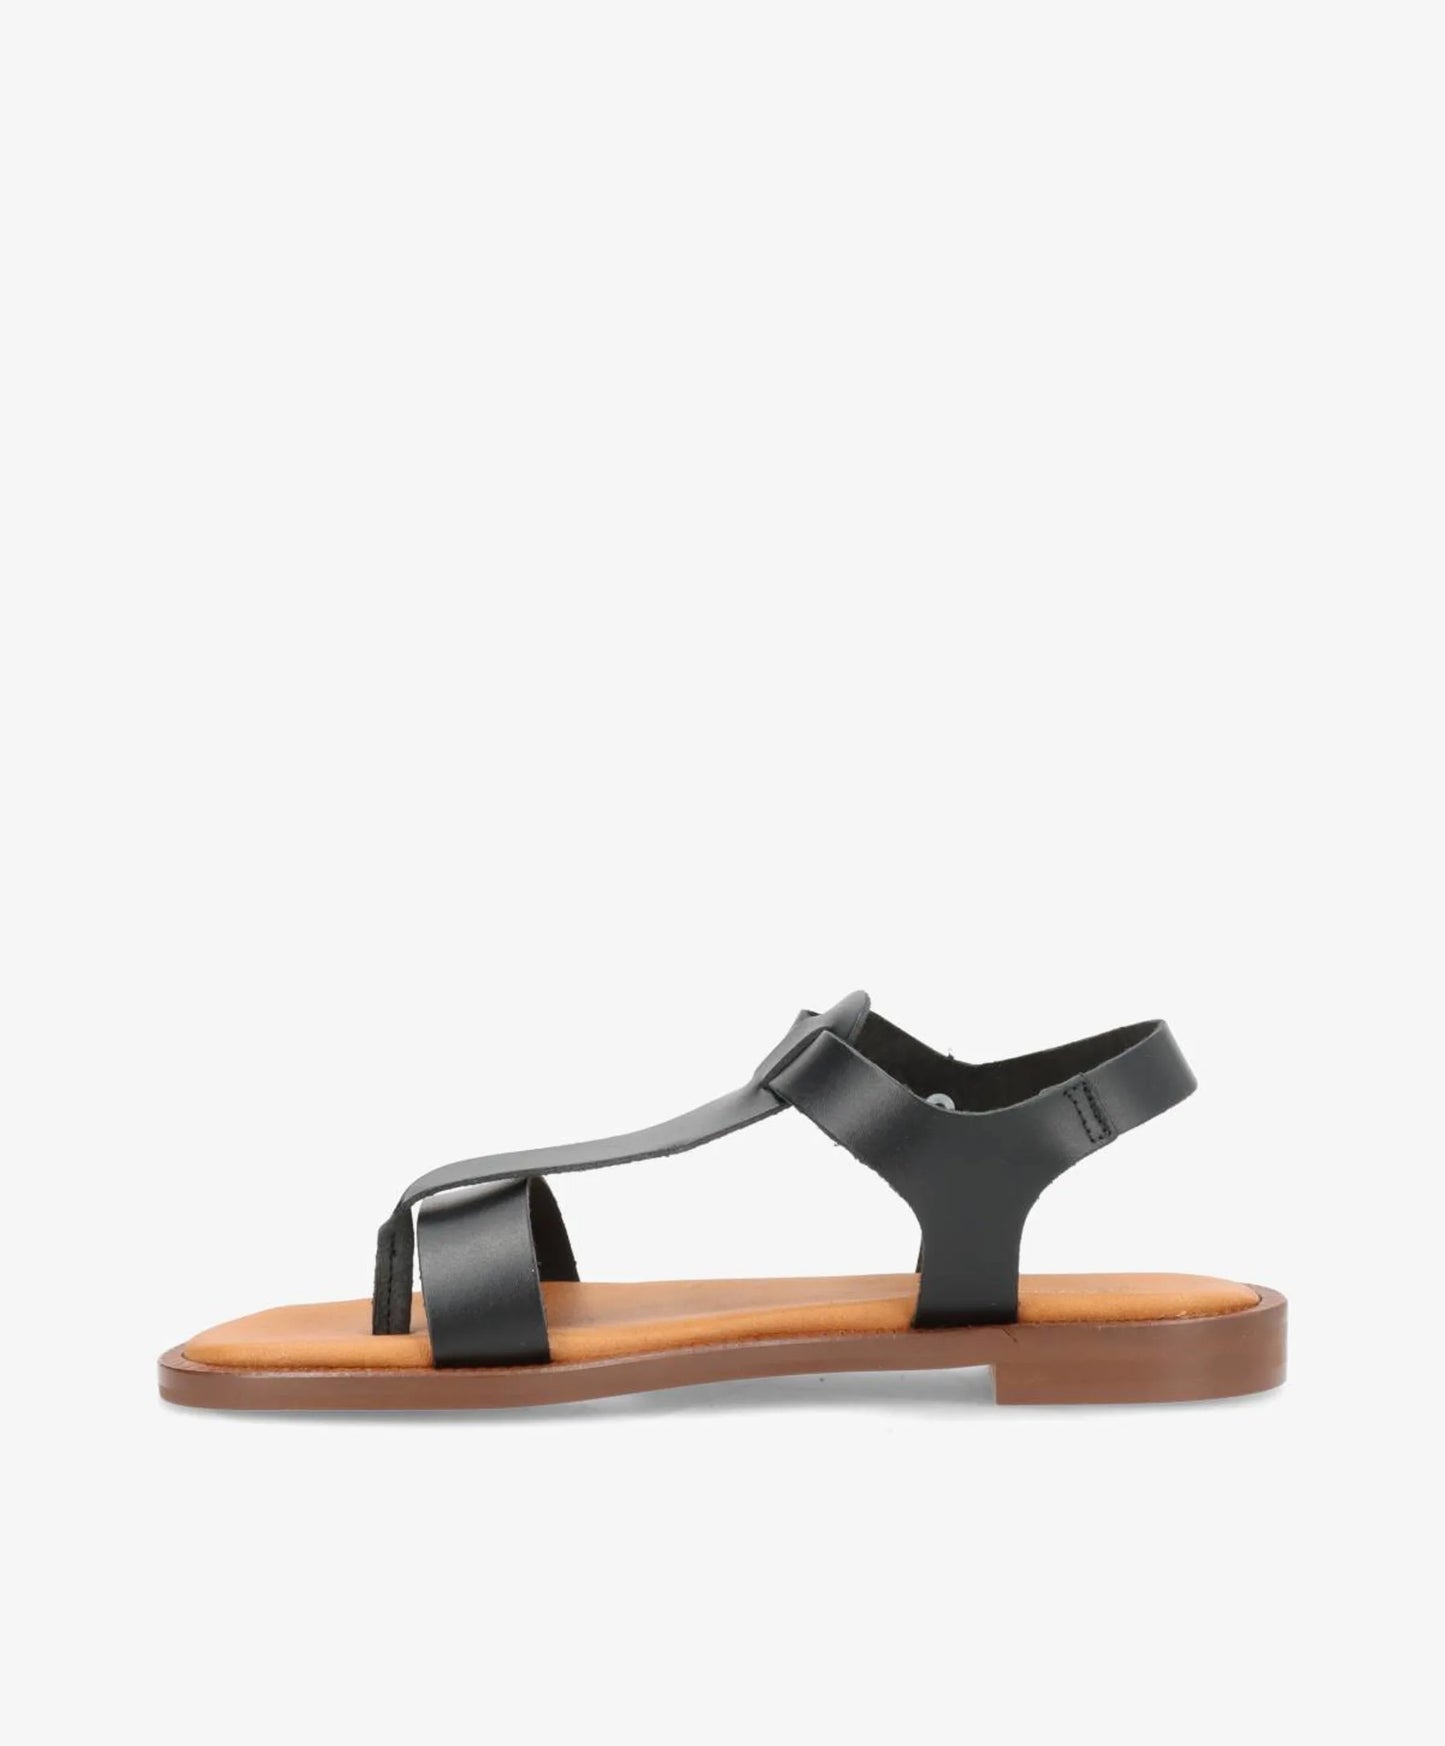 Shoedesign, Evita Black sandal